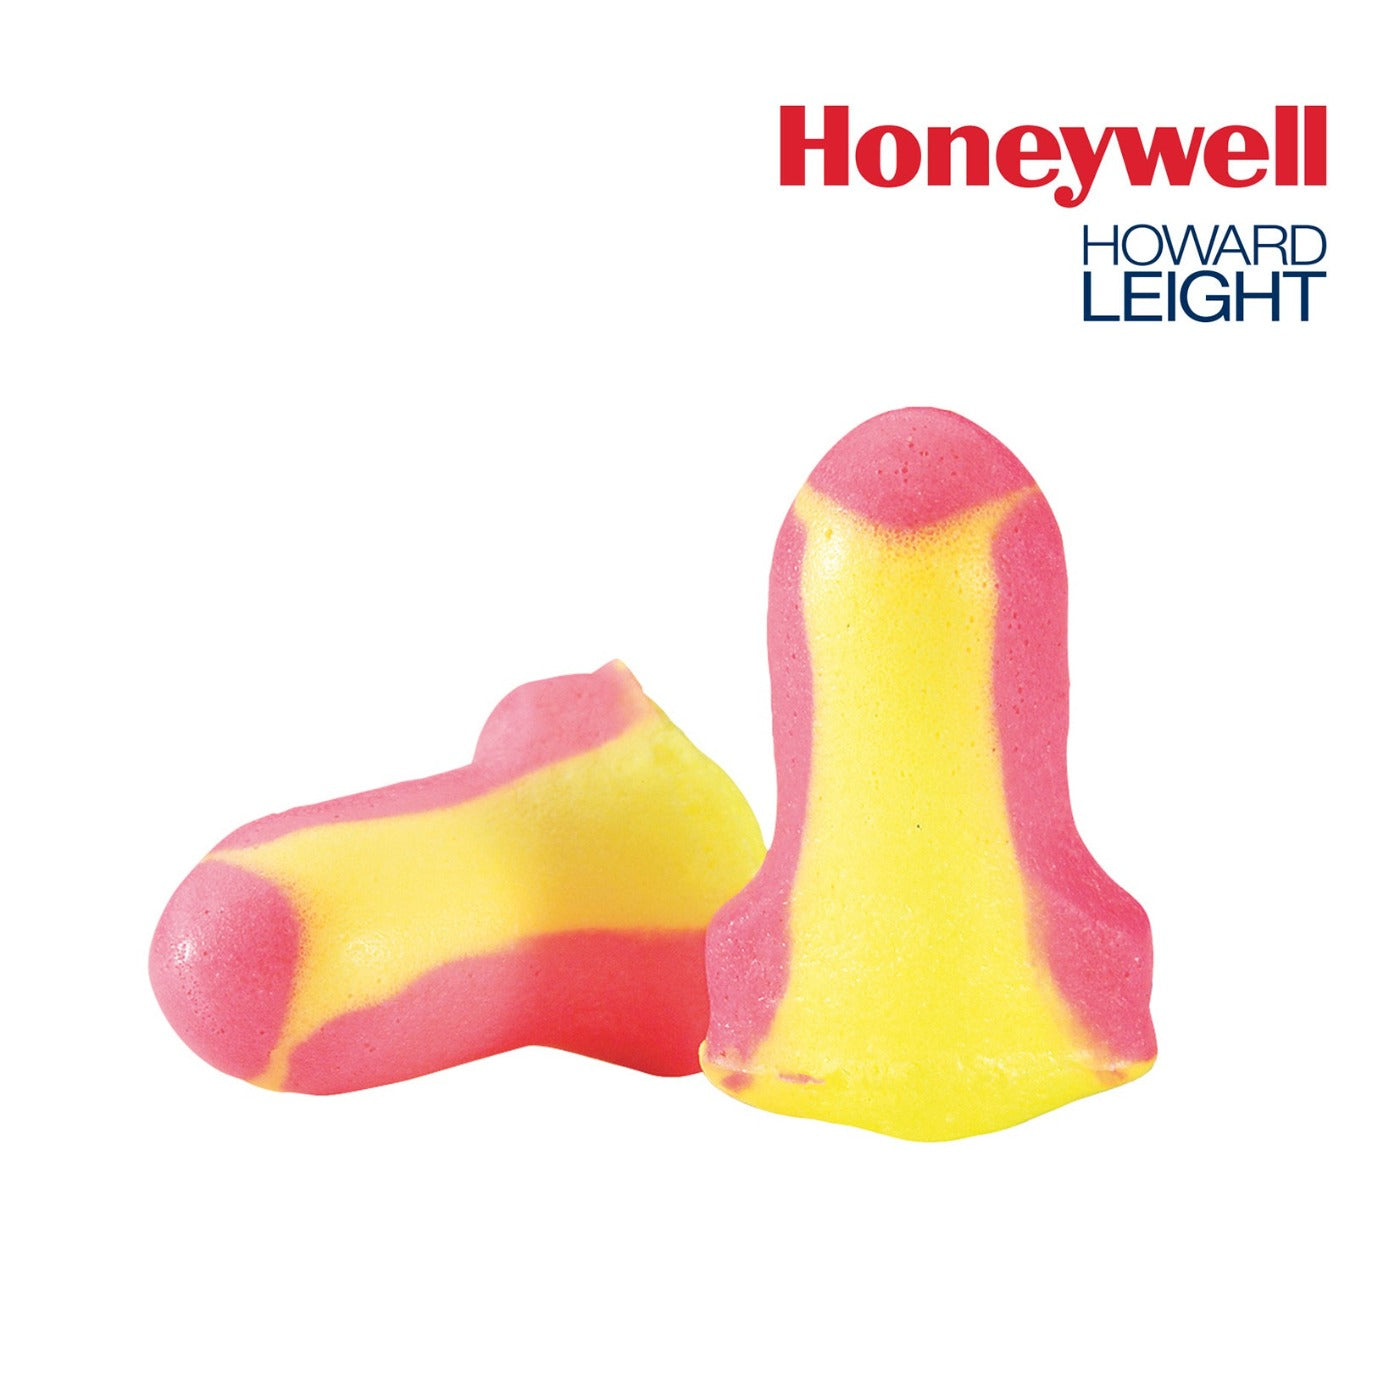 Honeywell Howard Leight Laser Lite 3301105 earplugs